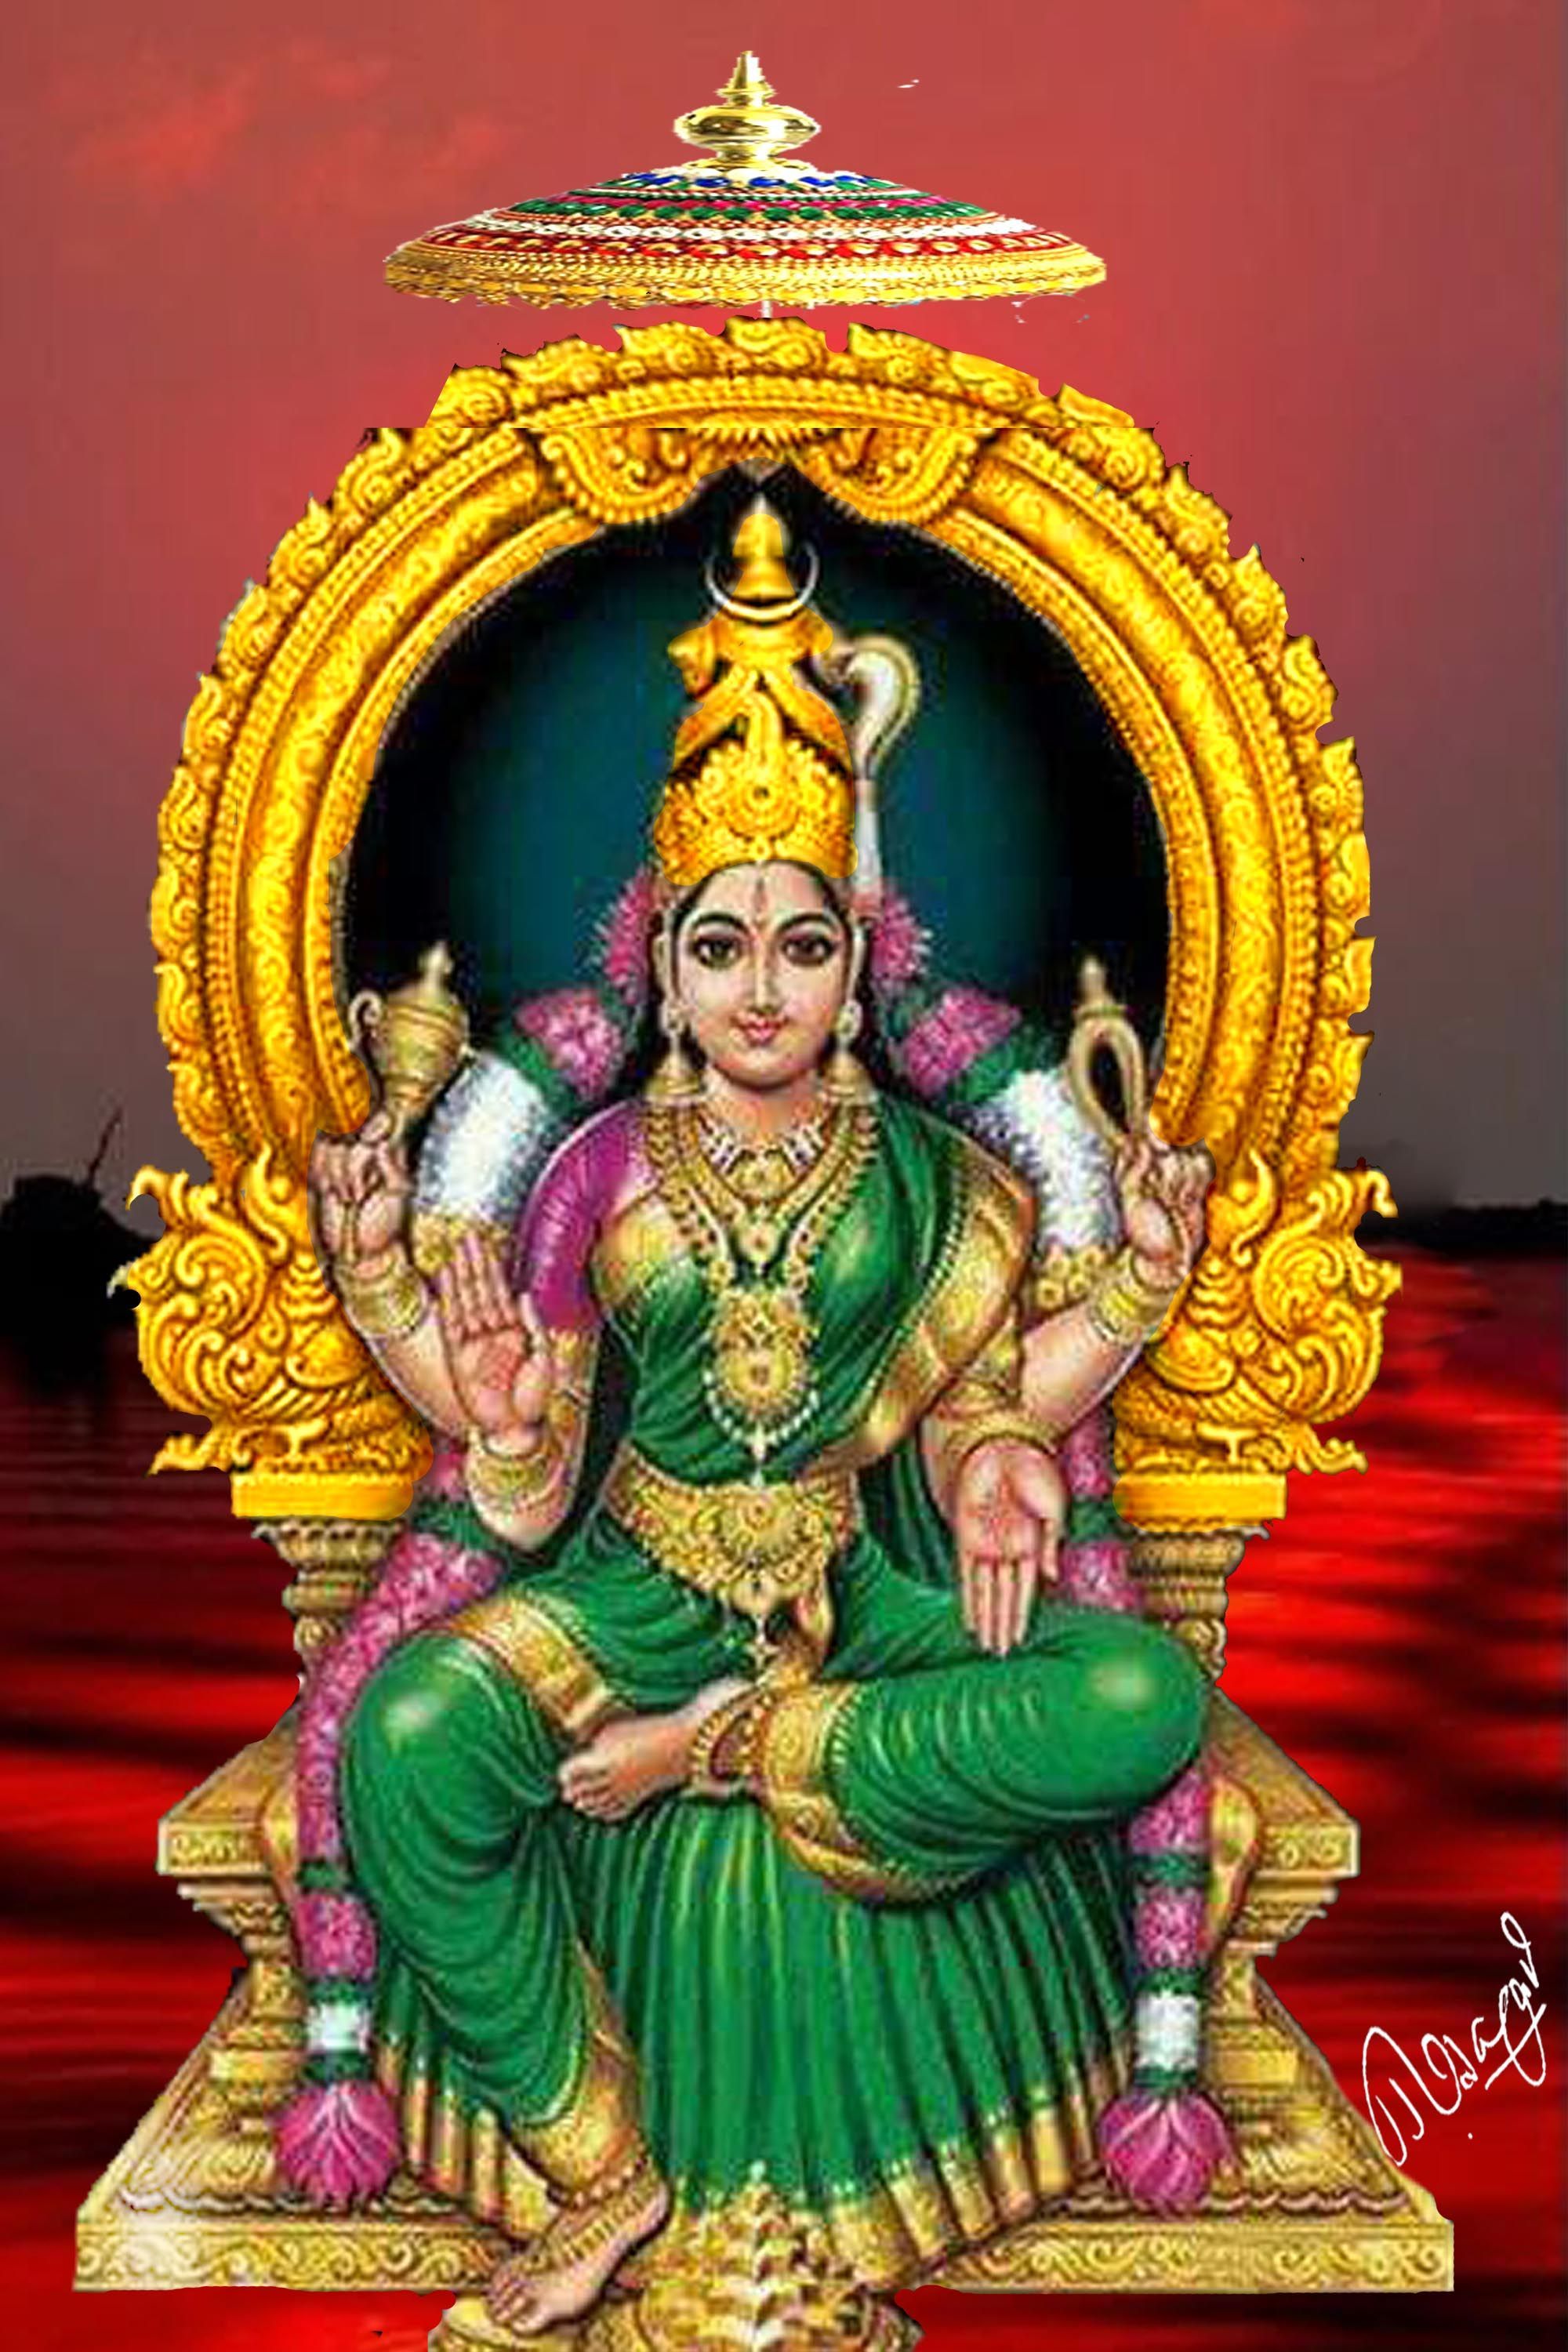 Bhuvaneswari devi. Durga goddess, Hindu deities, Goddess artwork